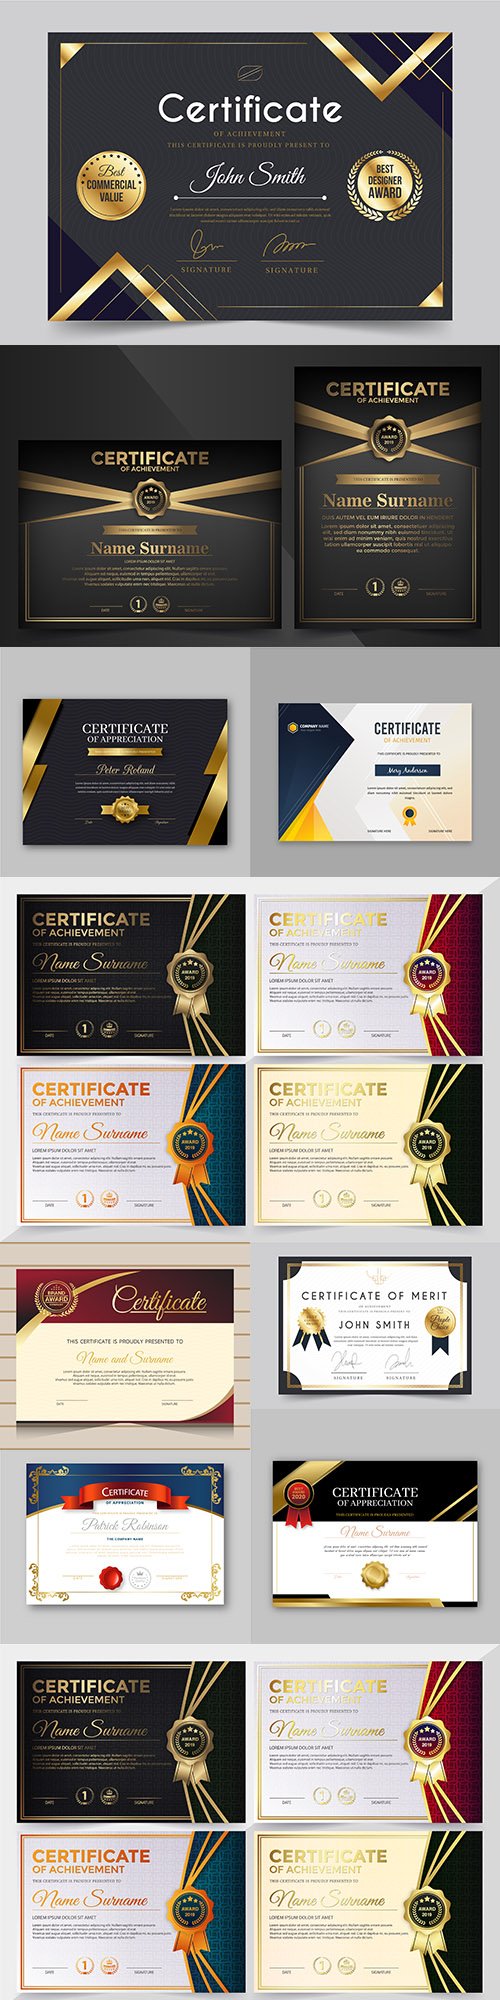 Certificate achievement template design collection